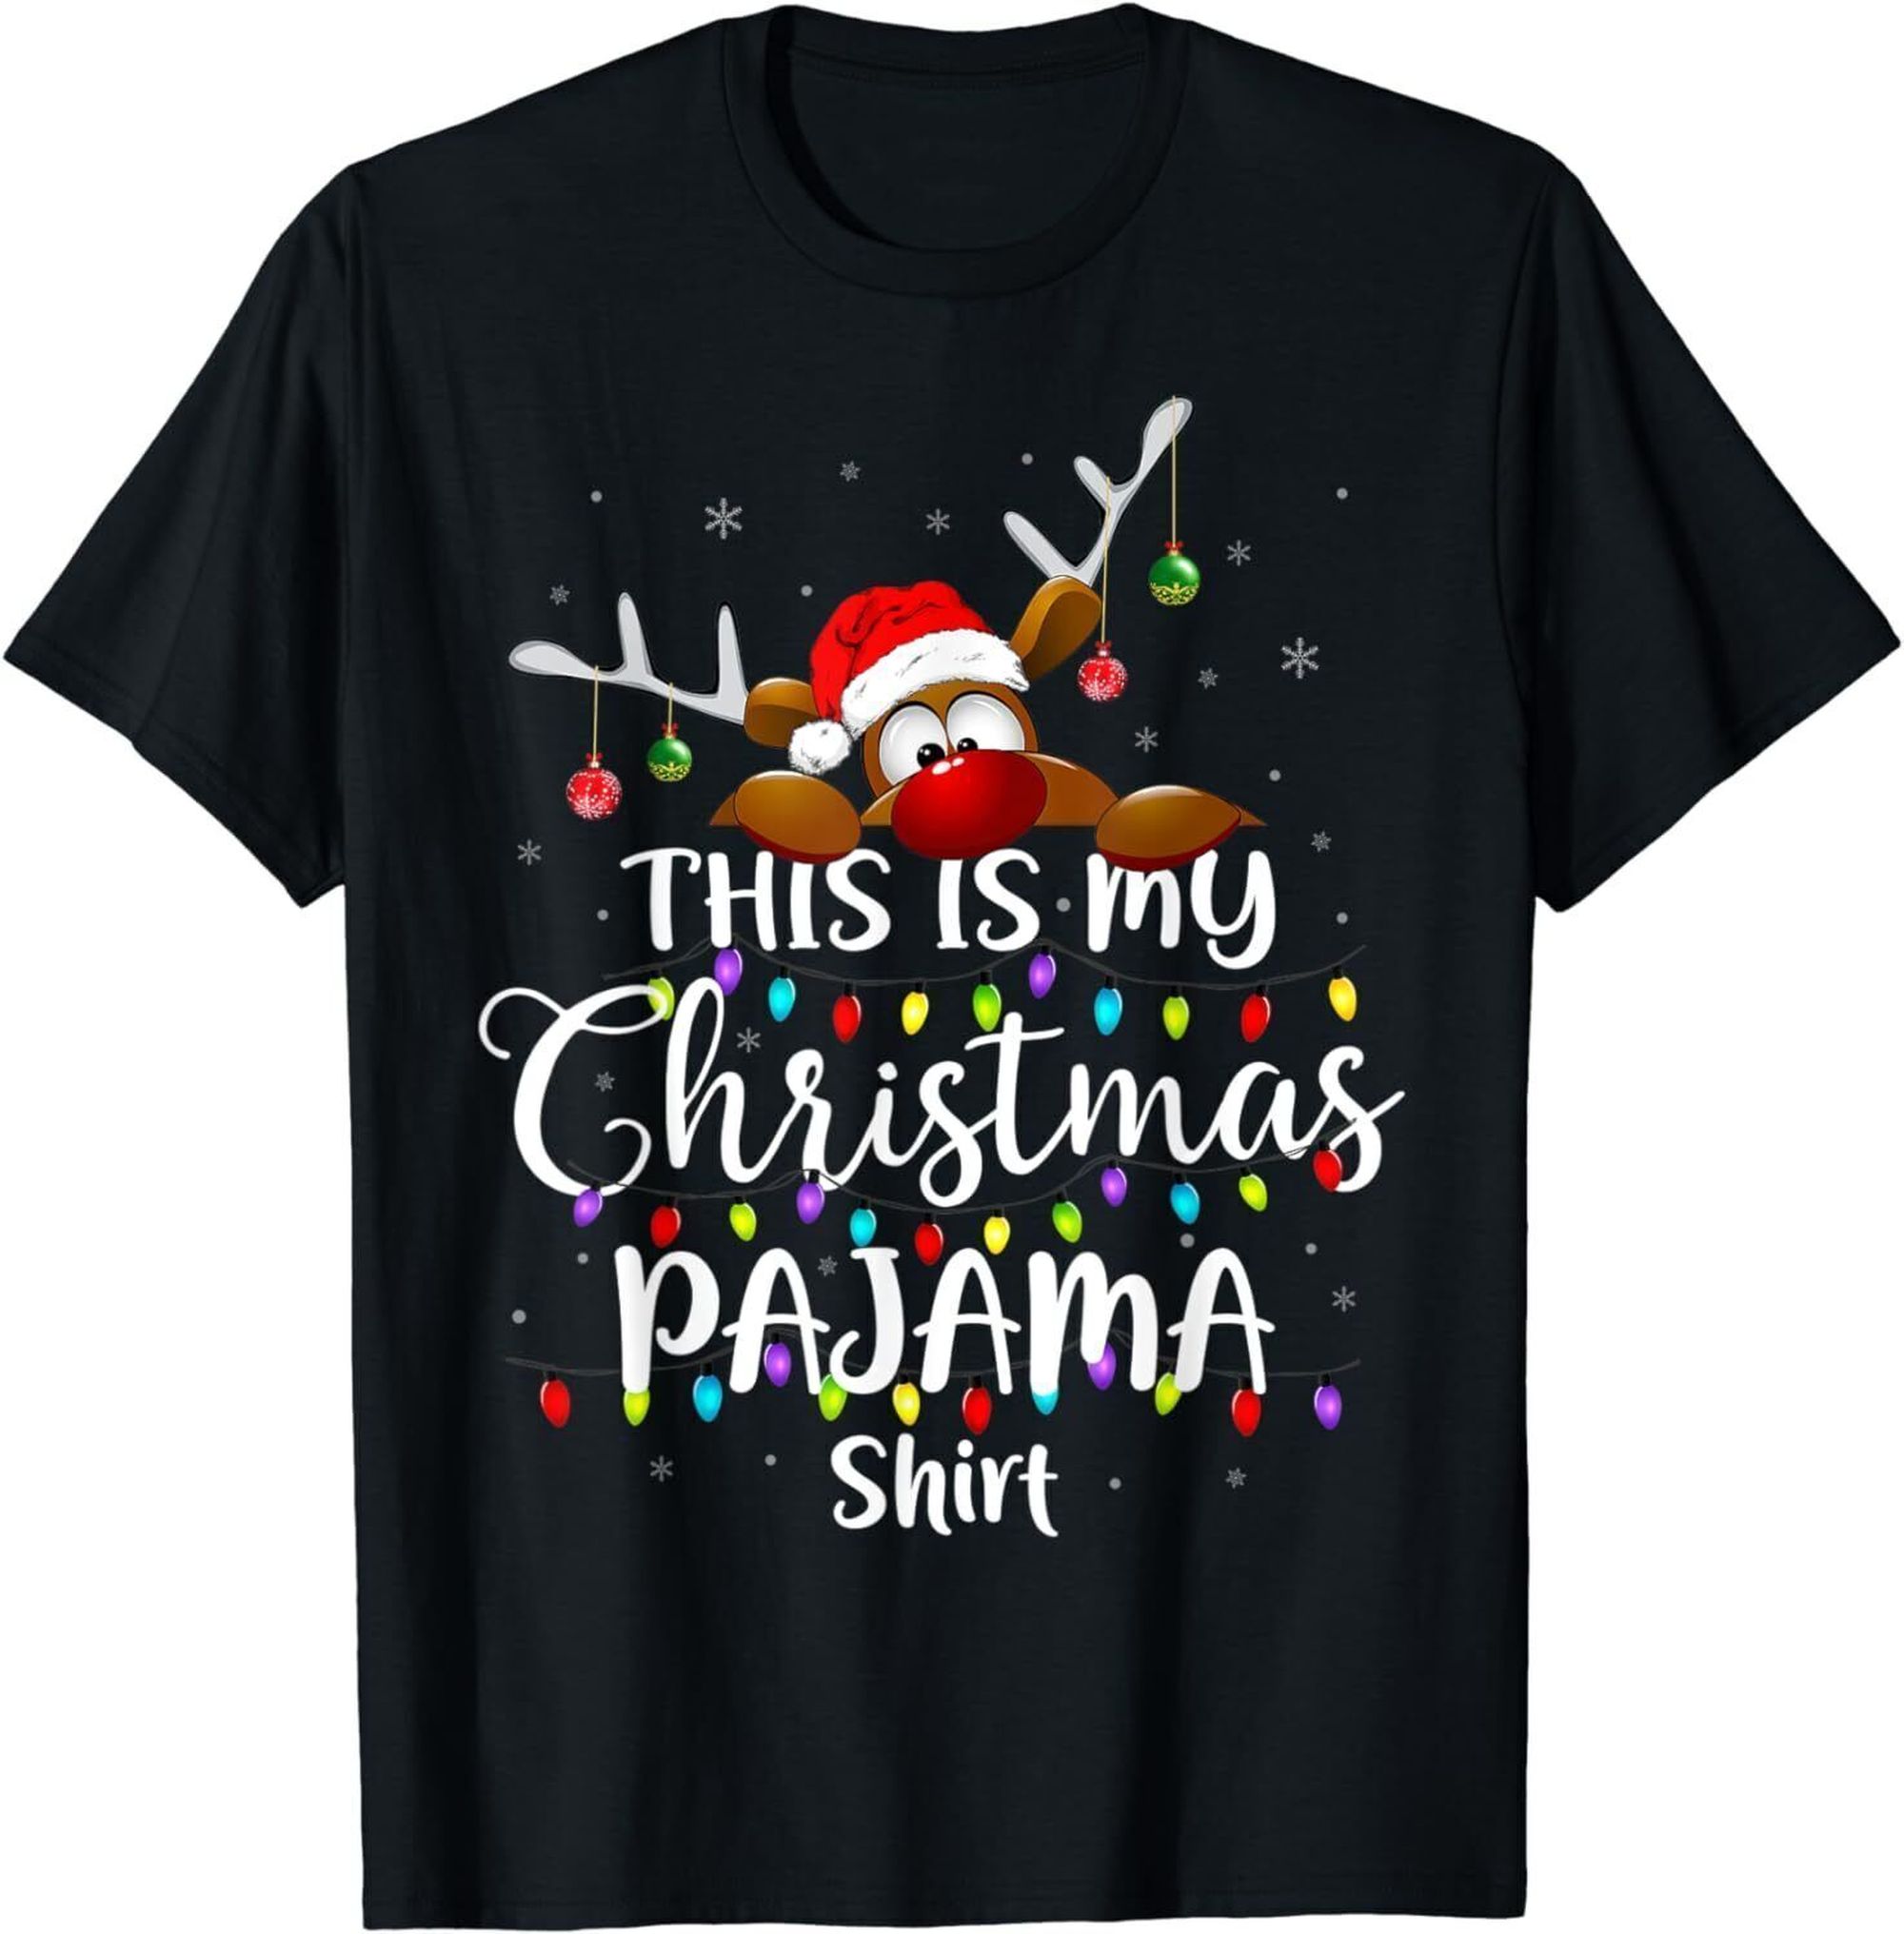 Festive Christmas Pajama Shirt with Hilarious Xmas Lights Design ...